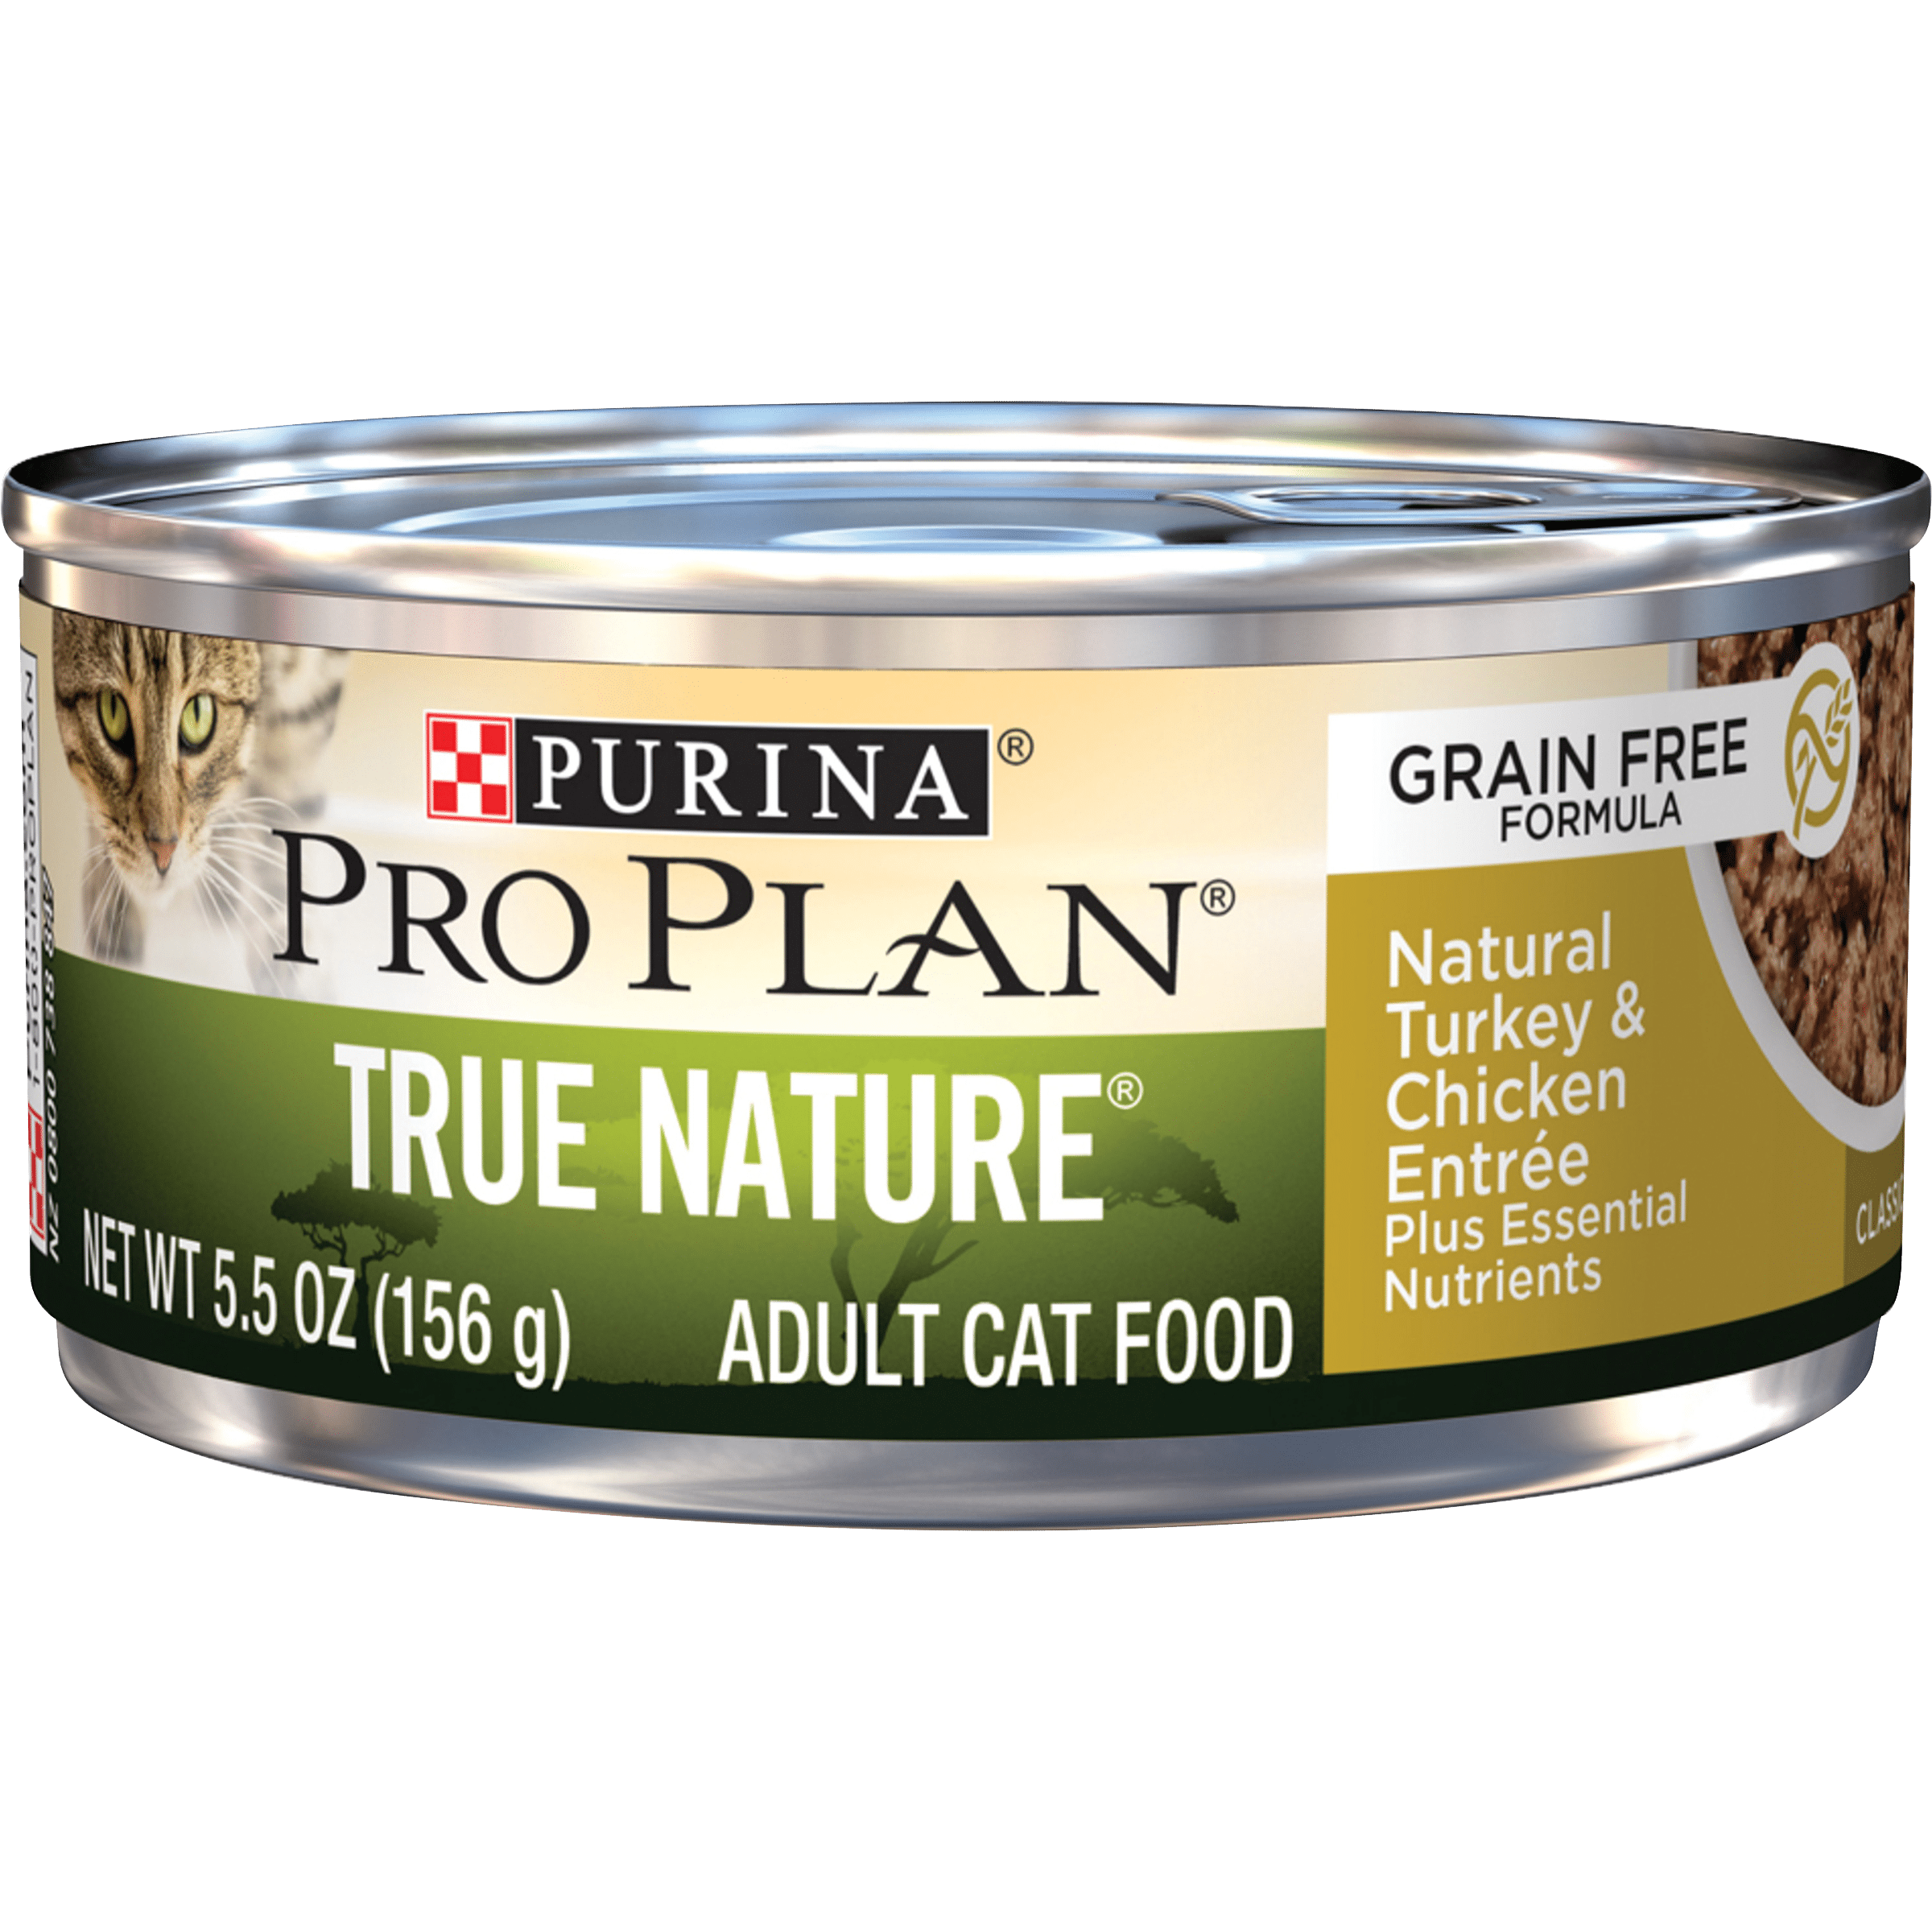 (24 Pack) Purina Pro Plan Natural, Grain Free Pate Wet Cat Food, TRUE